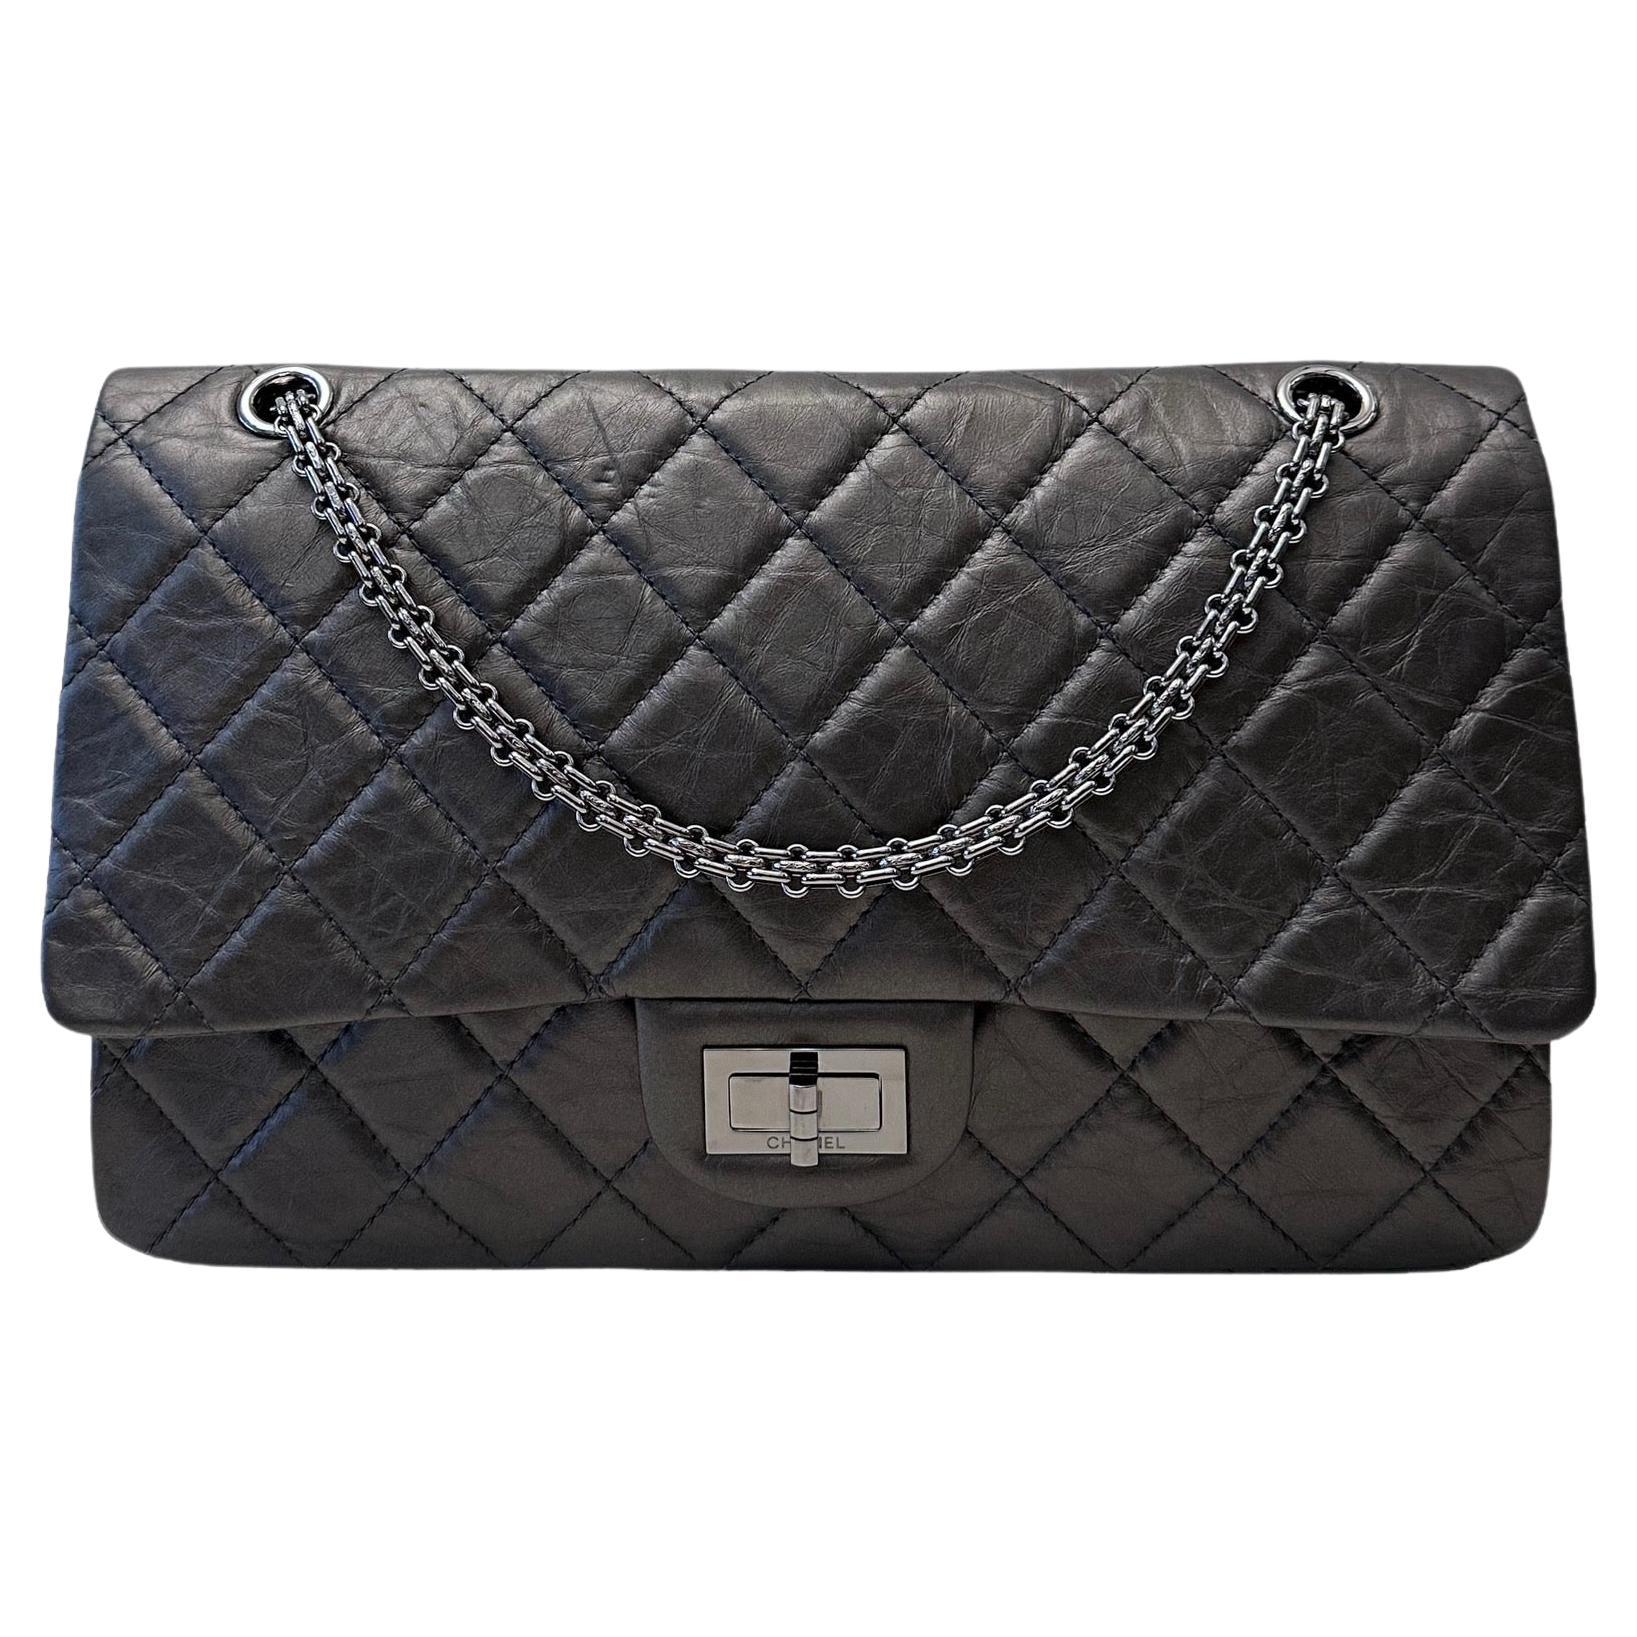 Chanel 2.55 Double Flap Grey Aged Calfskin Maxi Bag